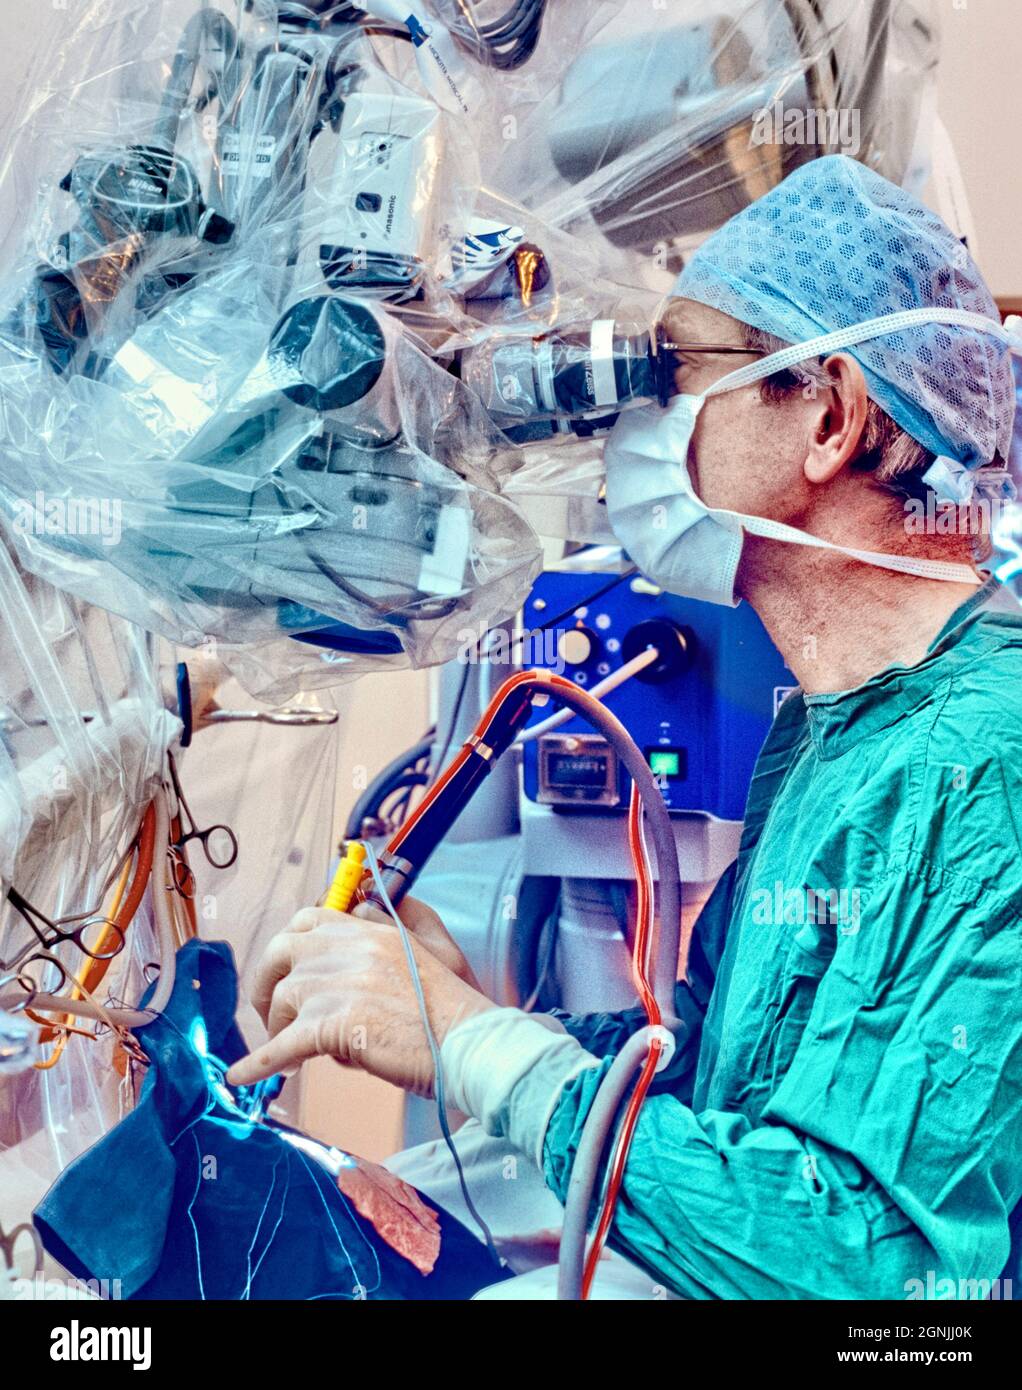 Neurosurgeon performs microsurgery for brain tumour removal. Stock Photo